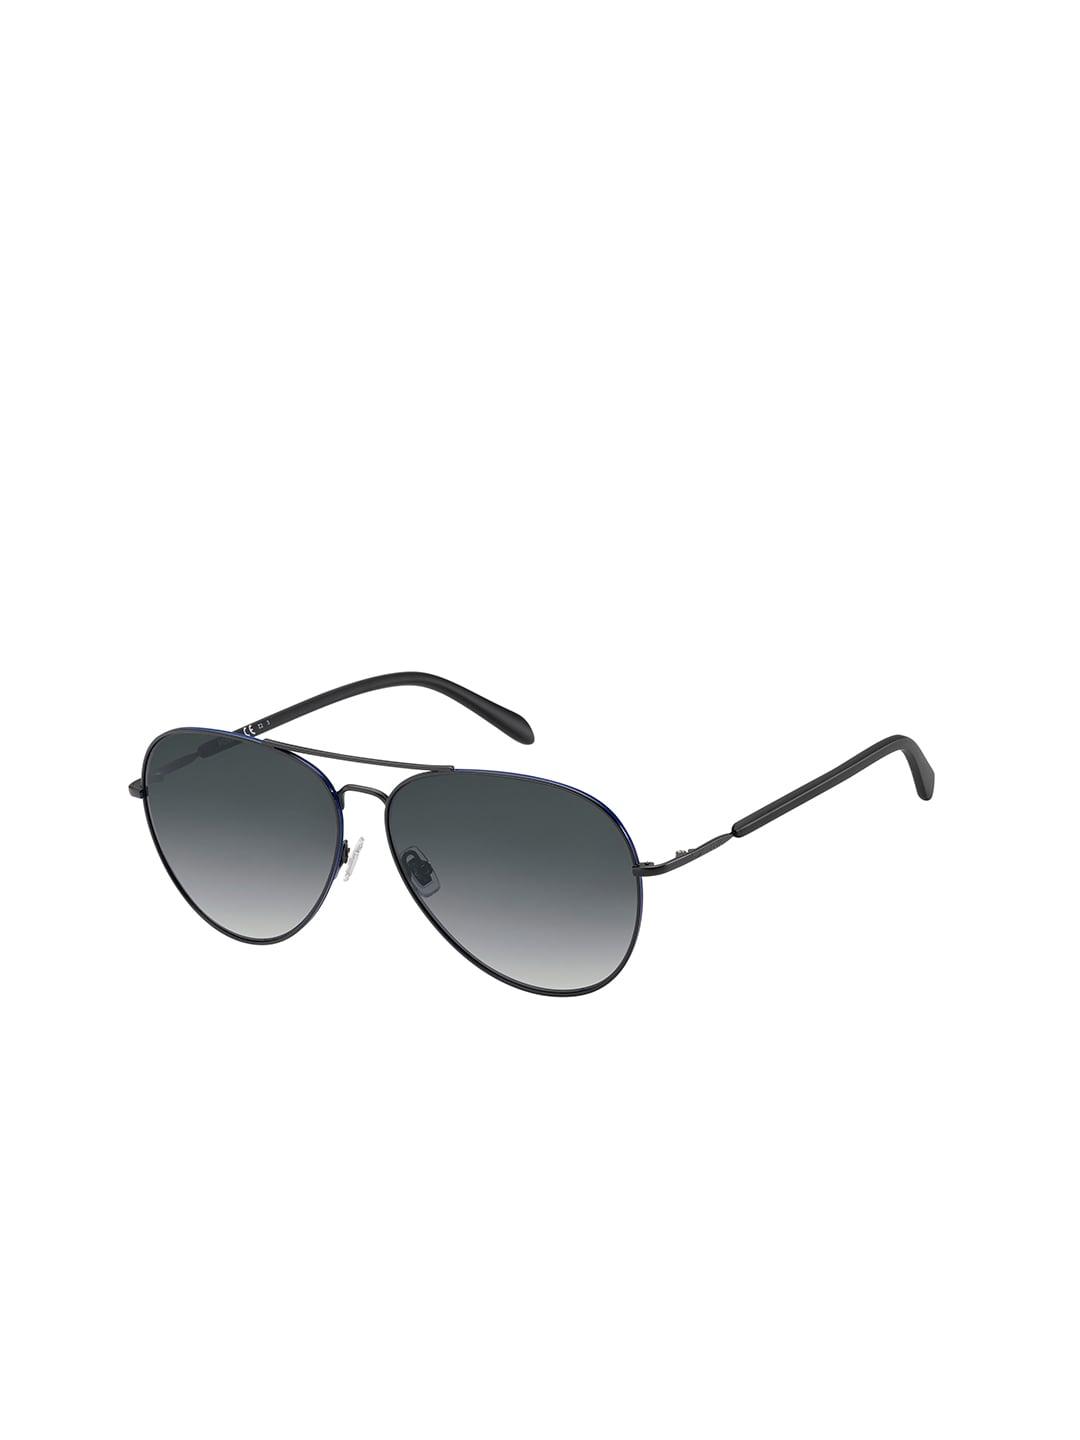 fossil men grey & black aviator sunglasses